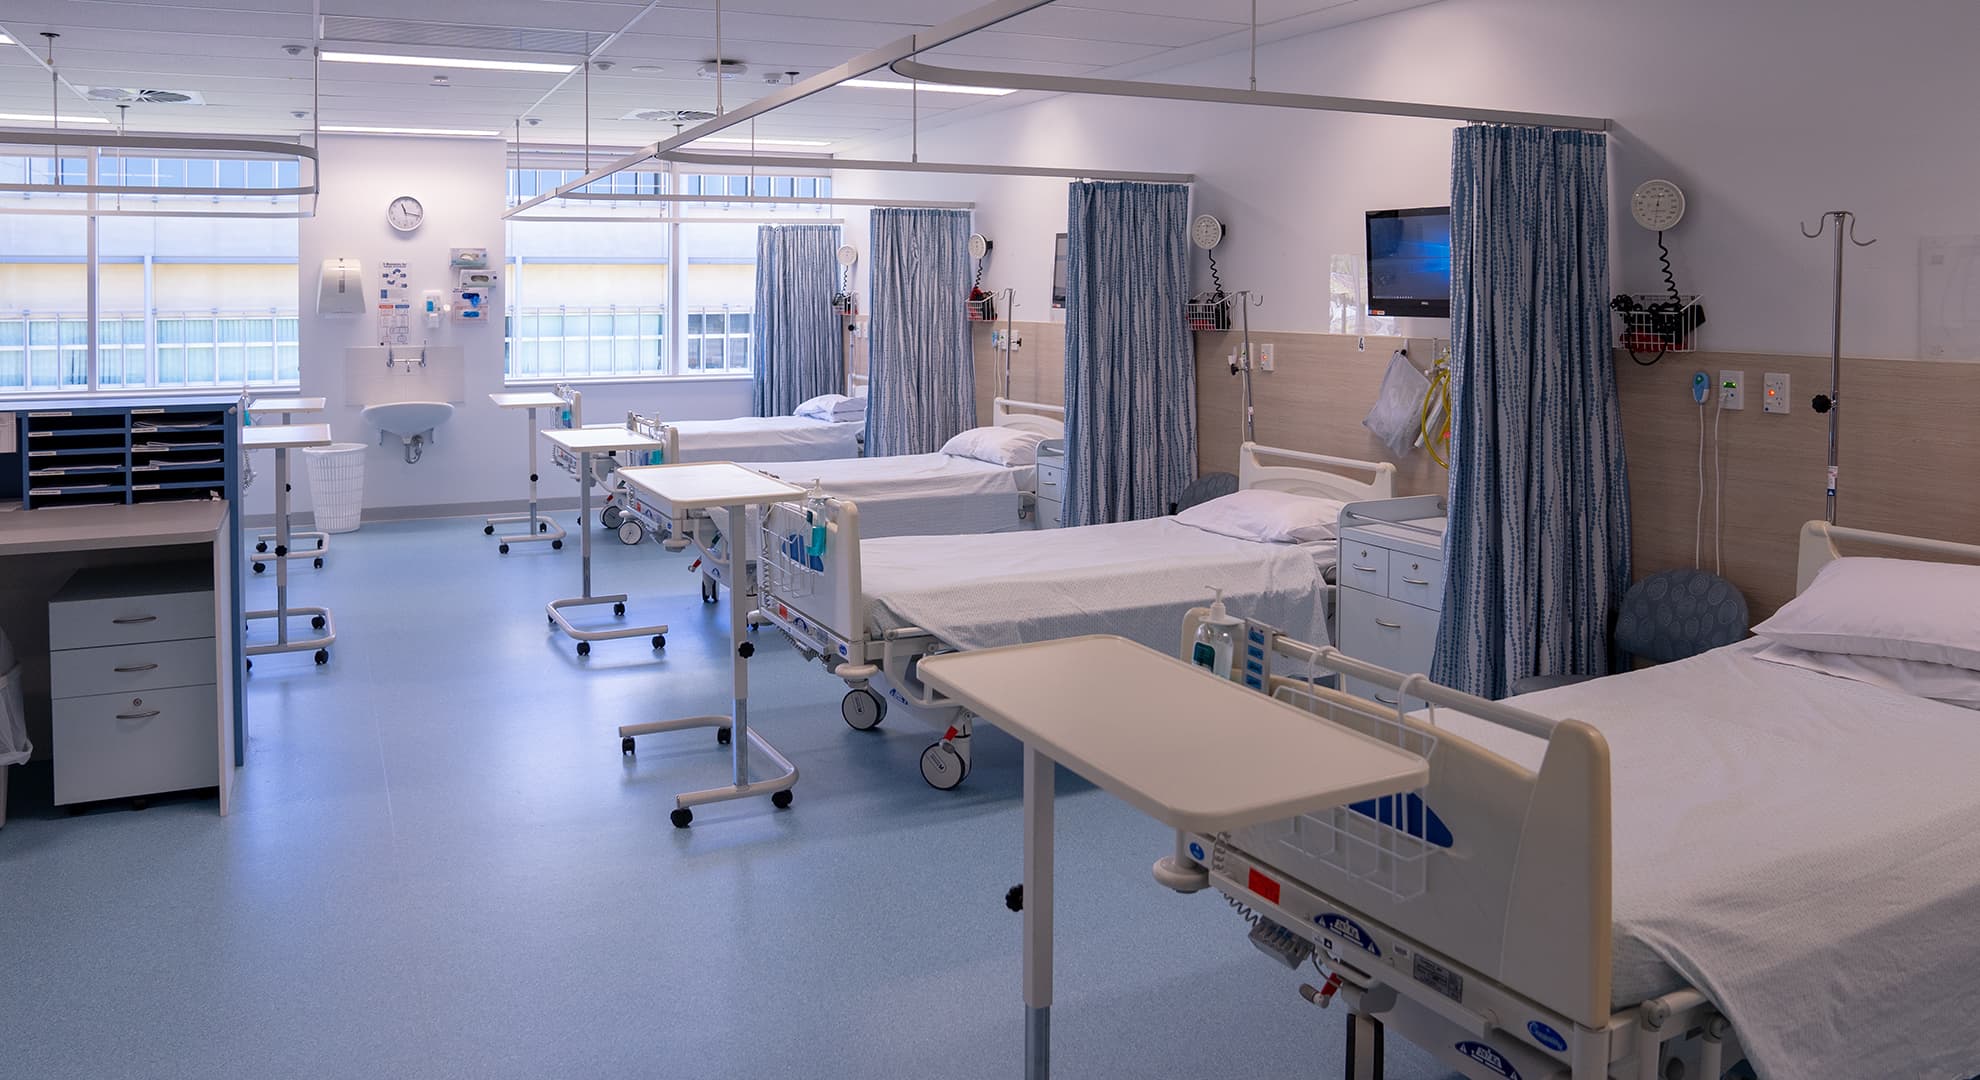 Simulated hospital ward on university campus